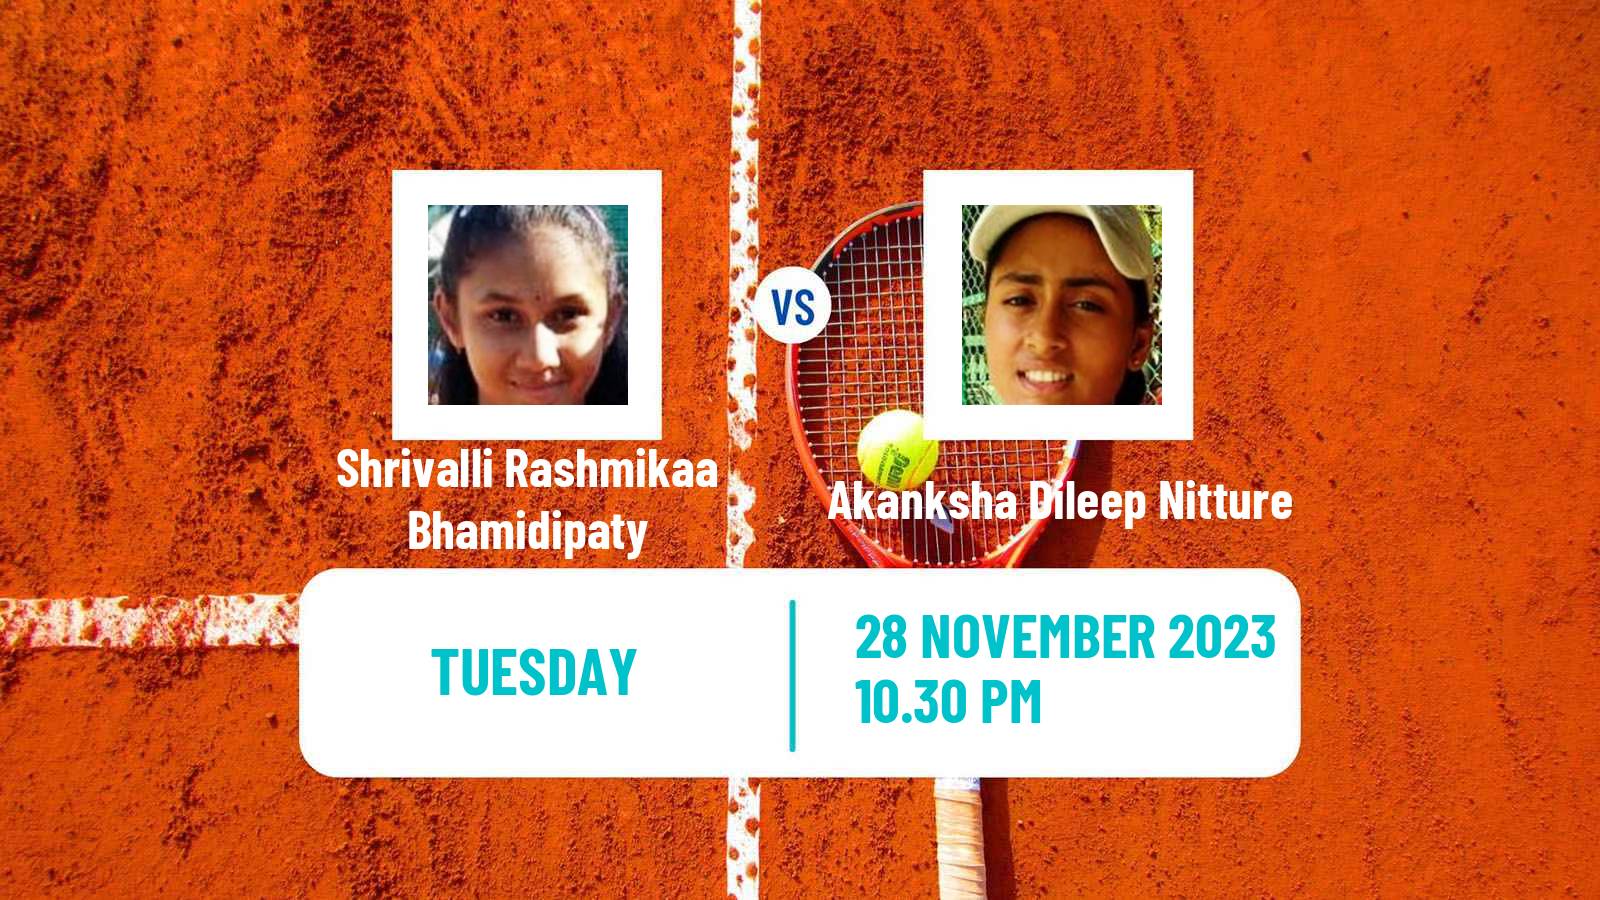 Tennis ITF W15 Ahmedabad Women 2023 Shrivalli Rashmikaa Bhamidipaty - Akanksha Dileep Nitture